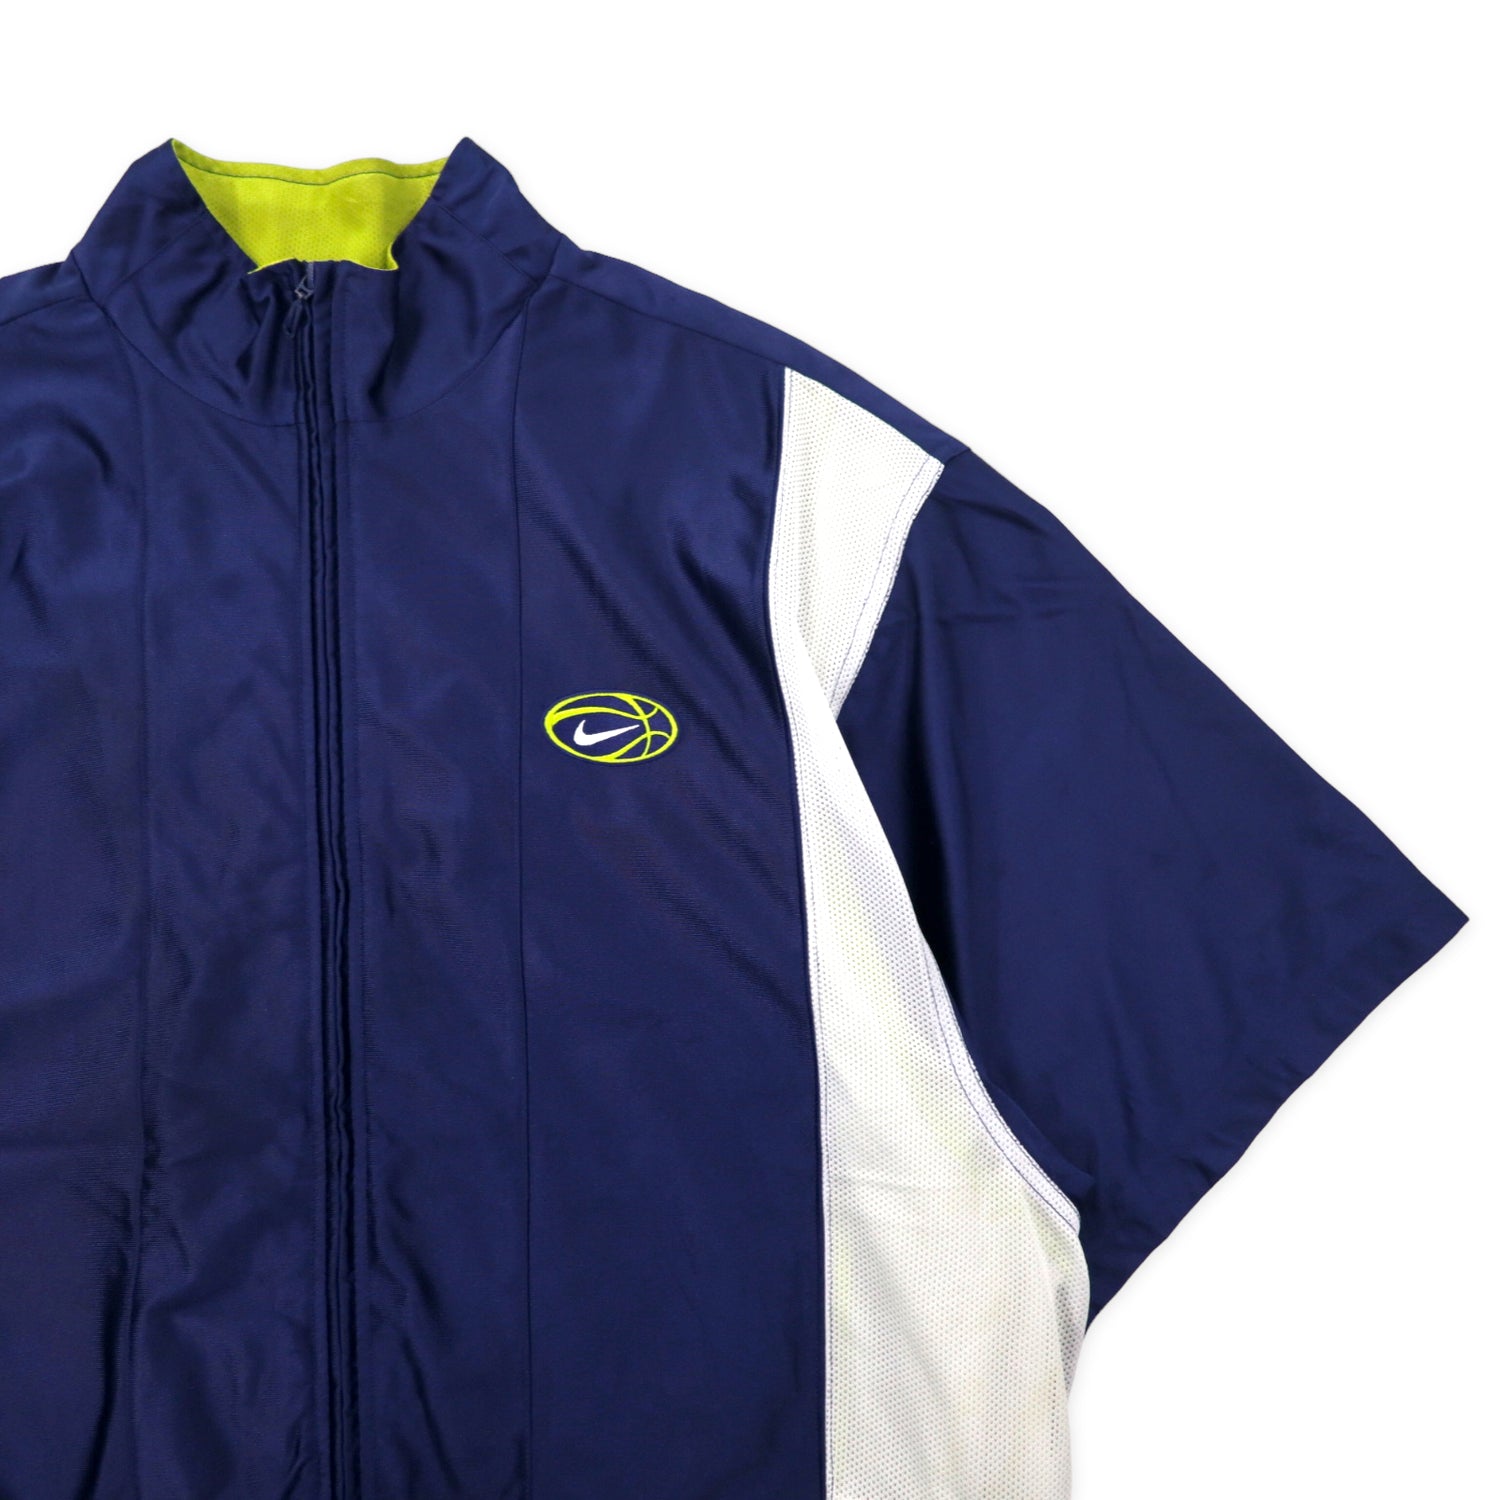 Nike 90's TRACK JACKET Jersey Short Sleeve XL Navy Polyester ...